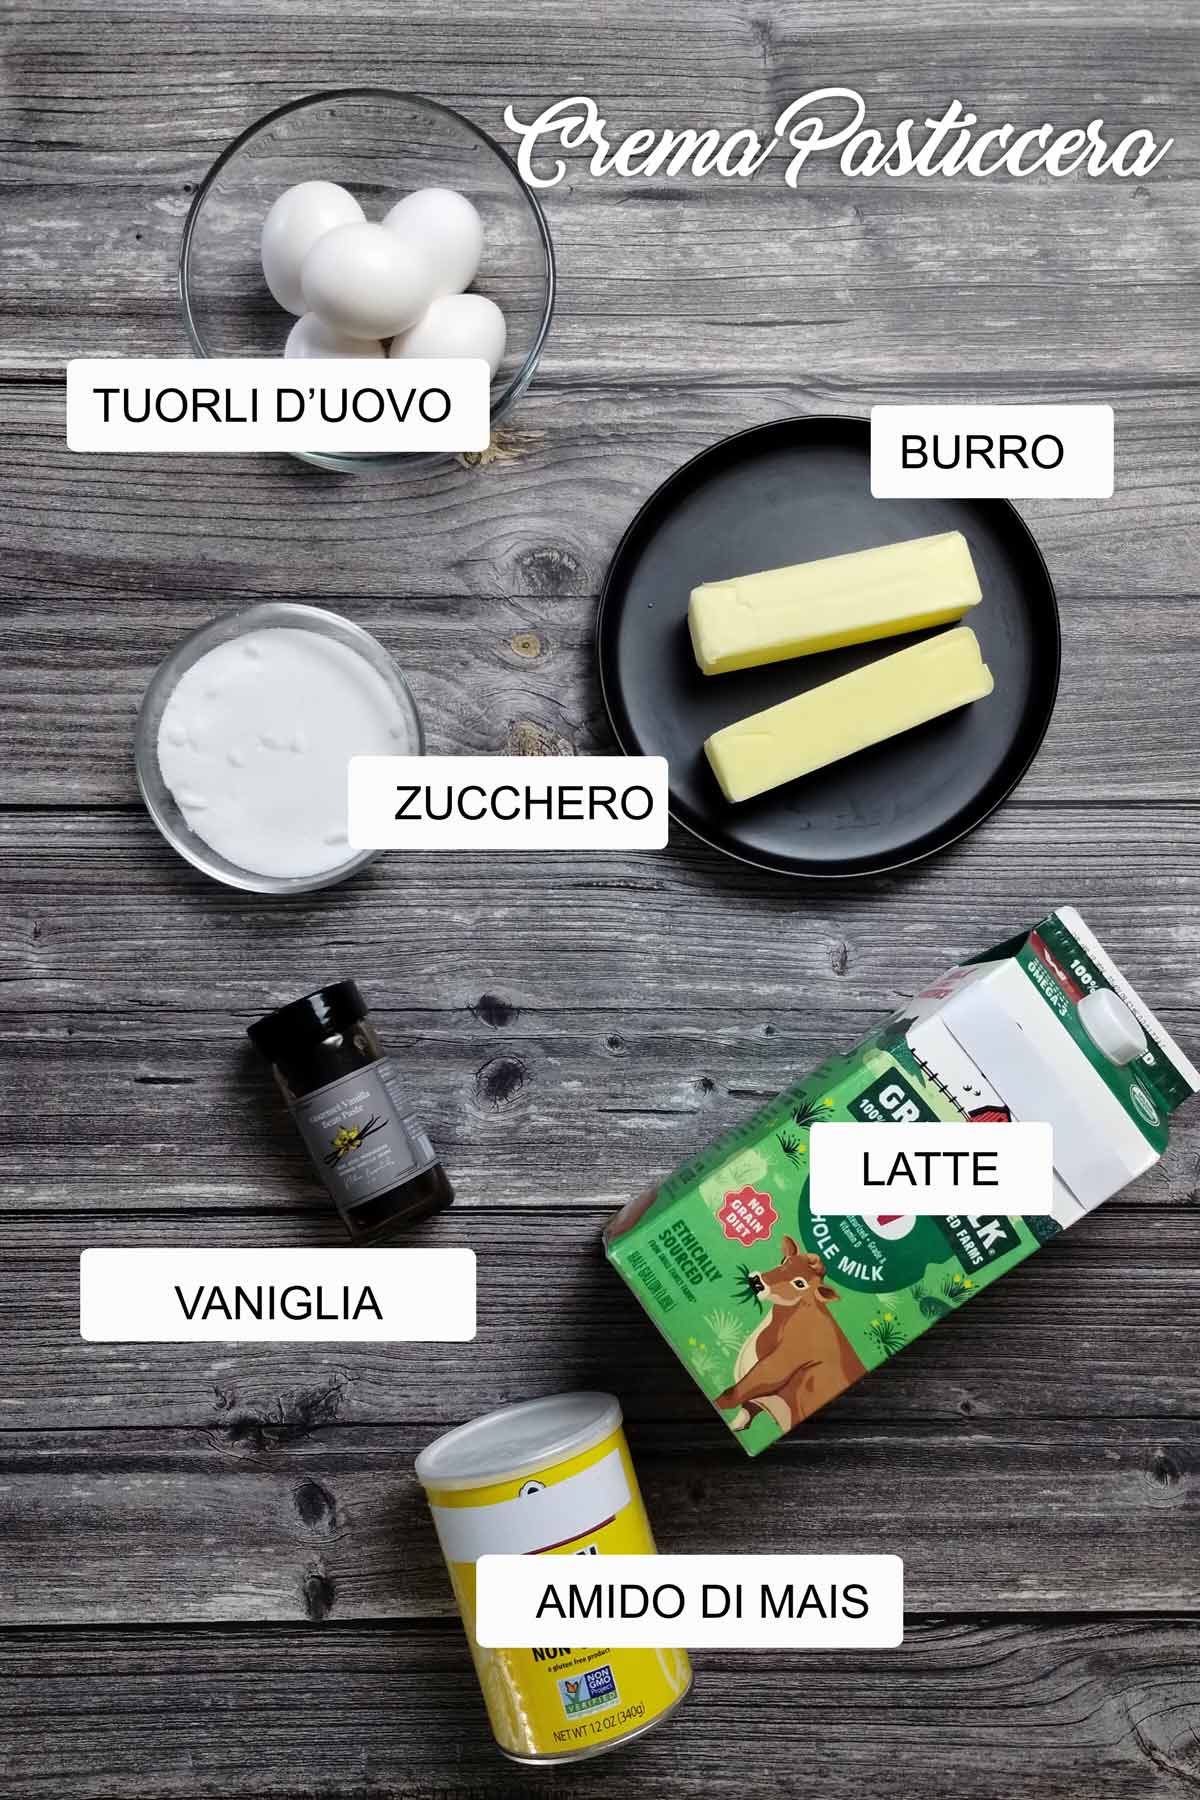 Ingredienti per crema pasticcera.